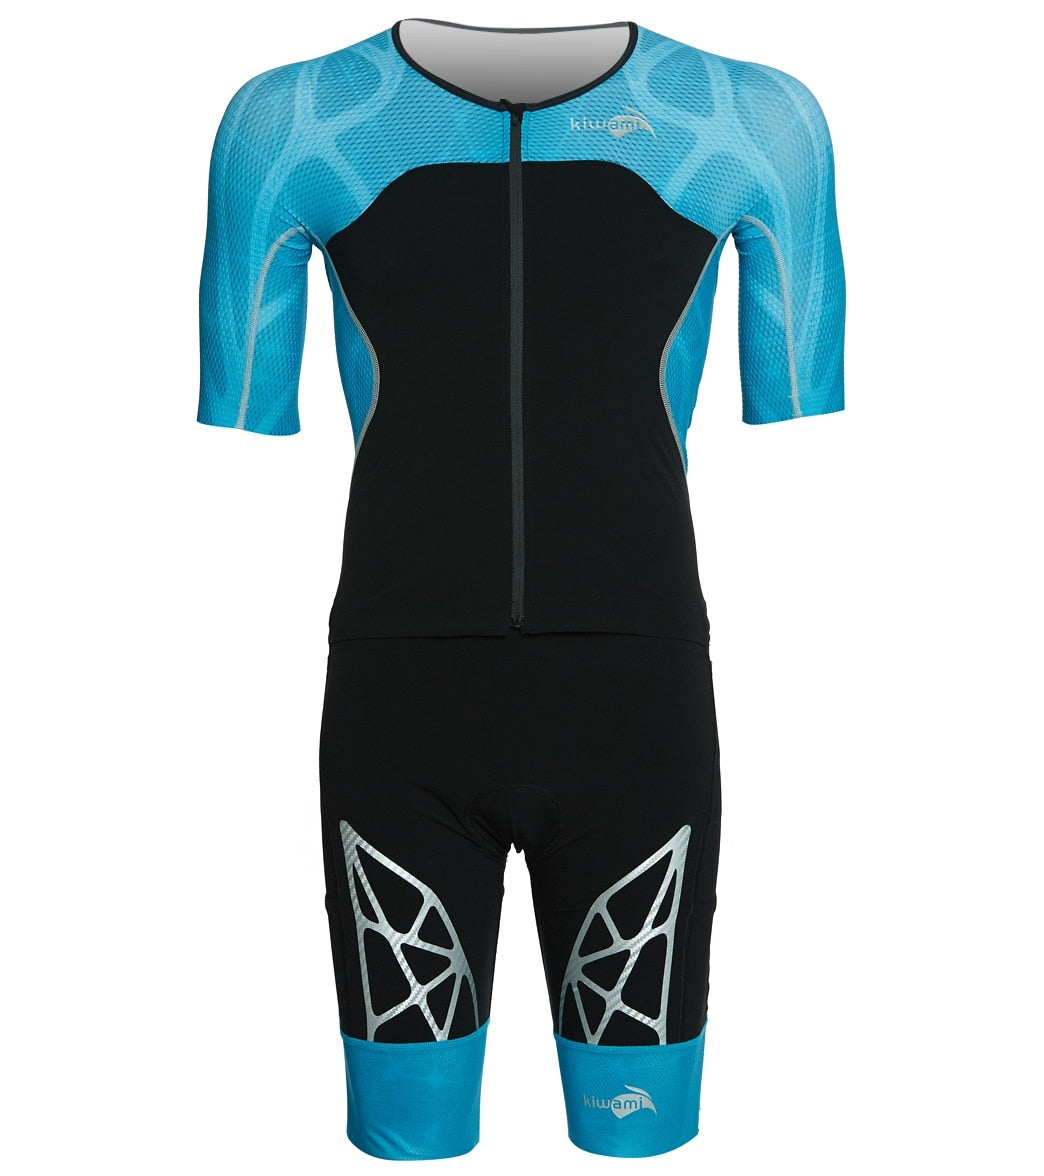 Kiwami Men's Spider Ld2 Aero Trisuit - Black/Emerald Xl Elastane/Polyamide - Swimoutlet.com